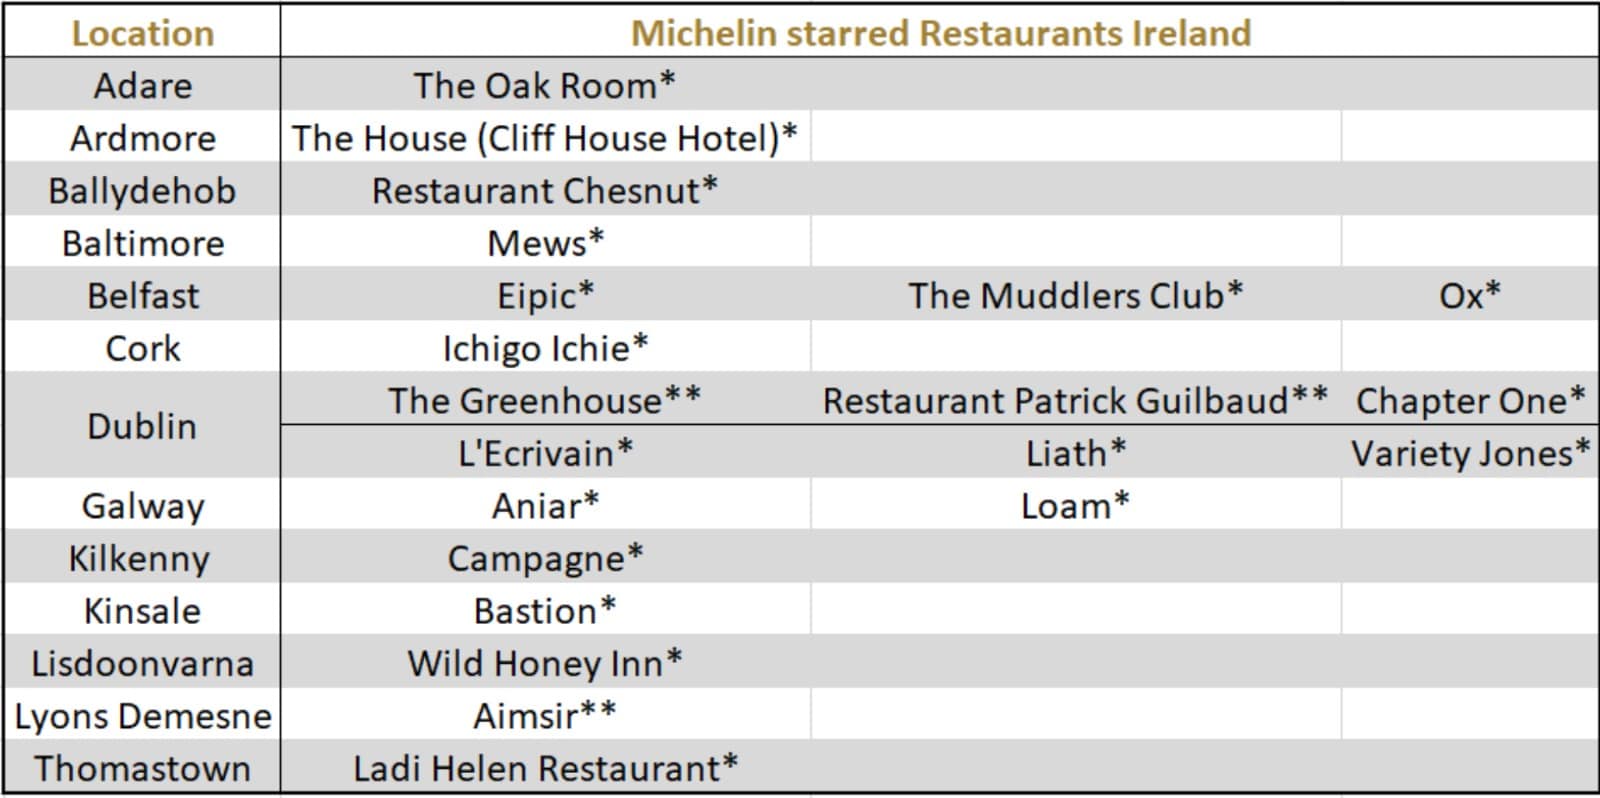 Michelin starred restaurants Ireland table